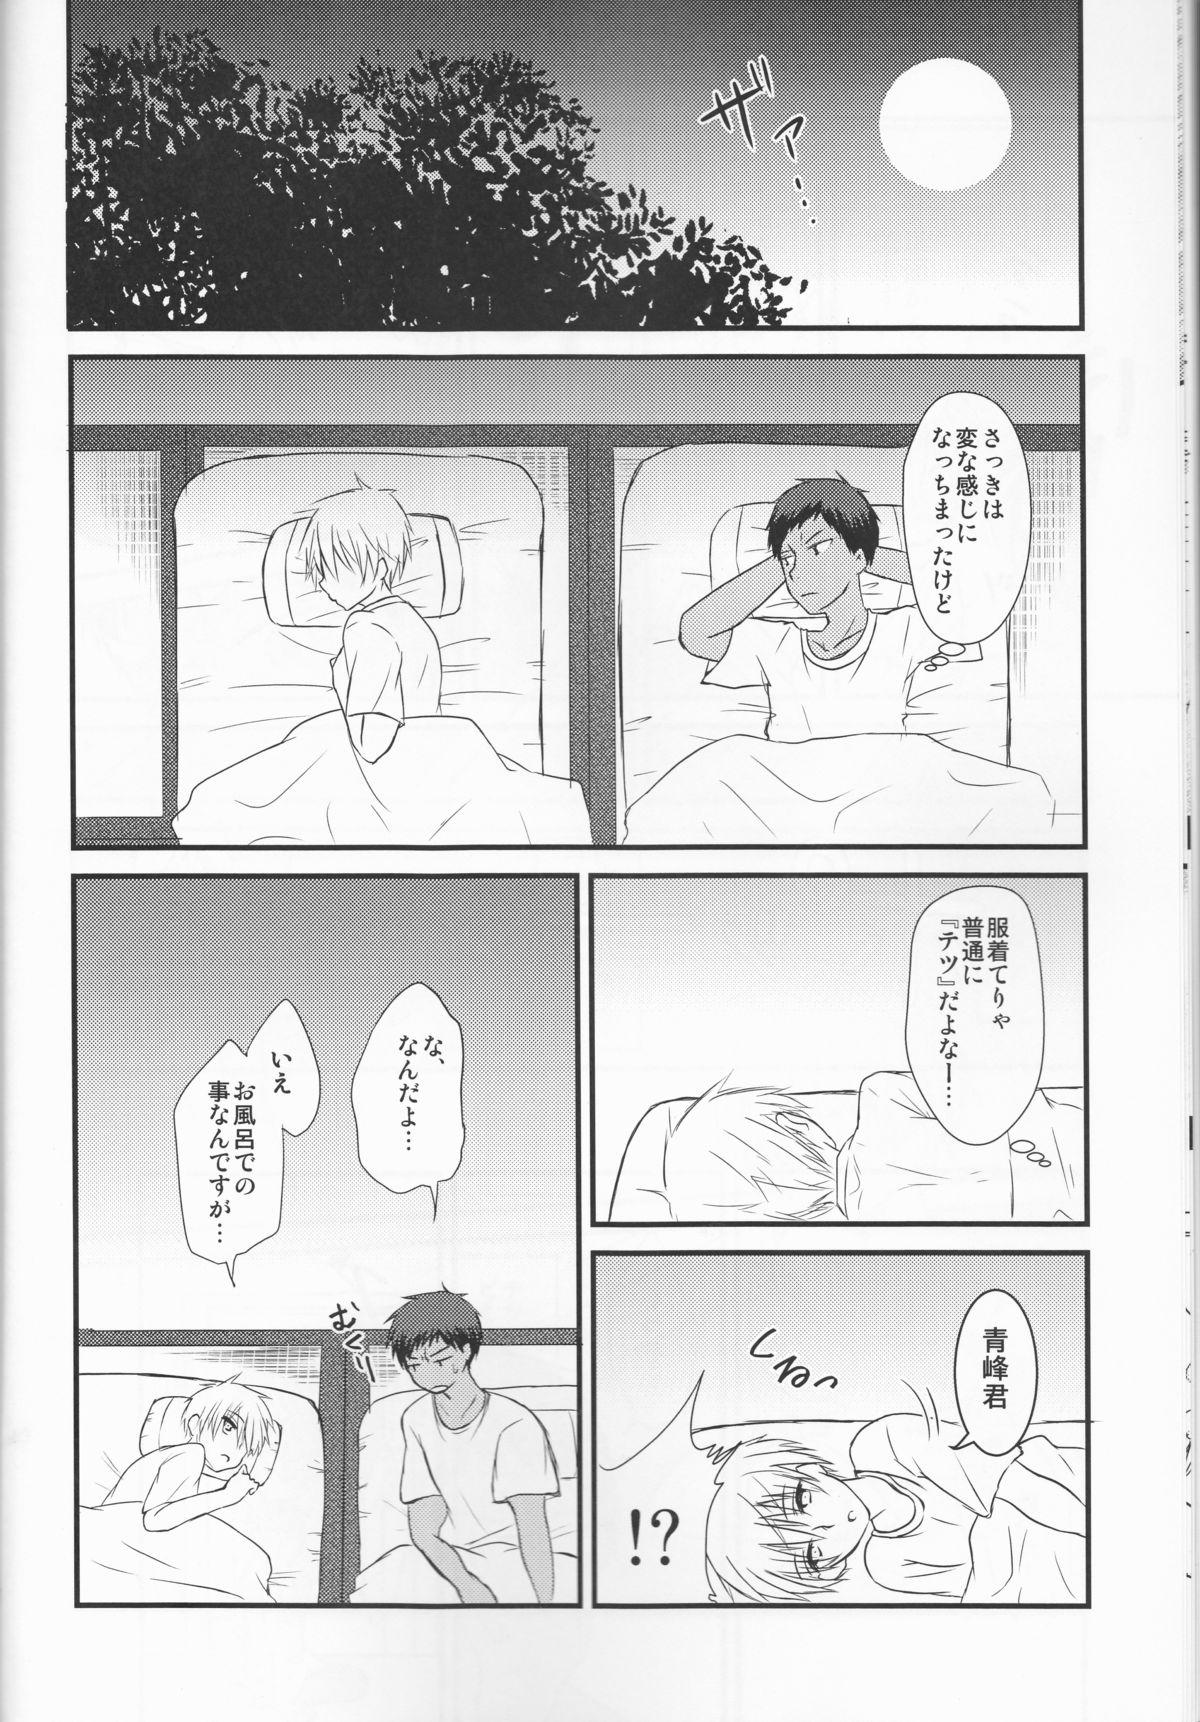 Van Yesterday of his and her tomorrow - Kuroko no basuke Kitchen - Page 12